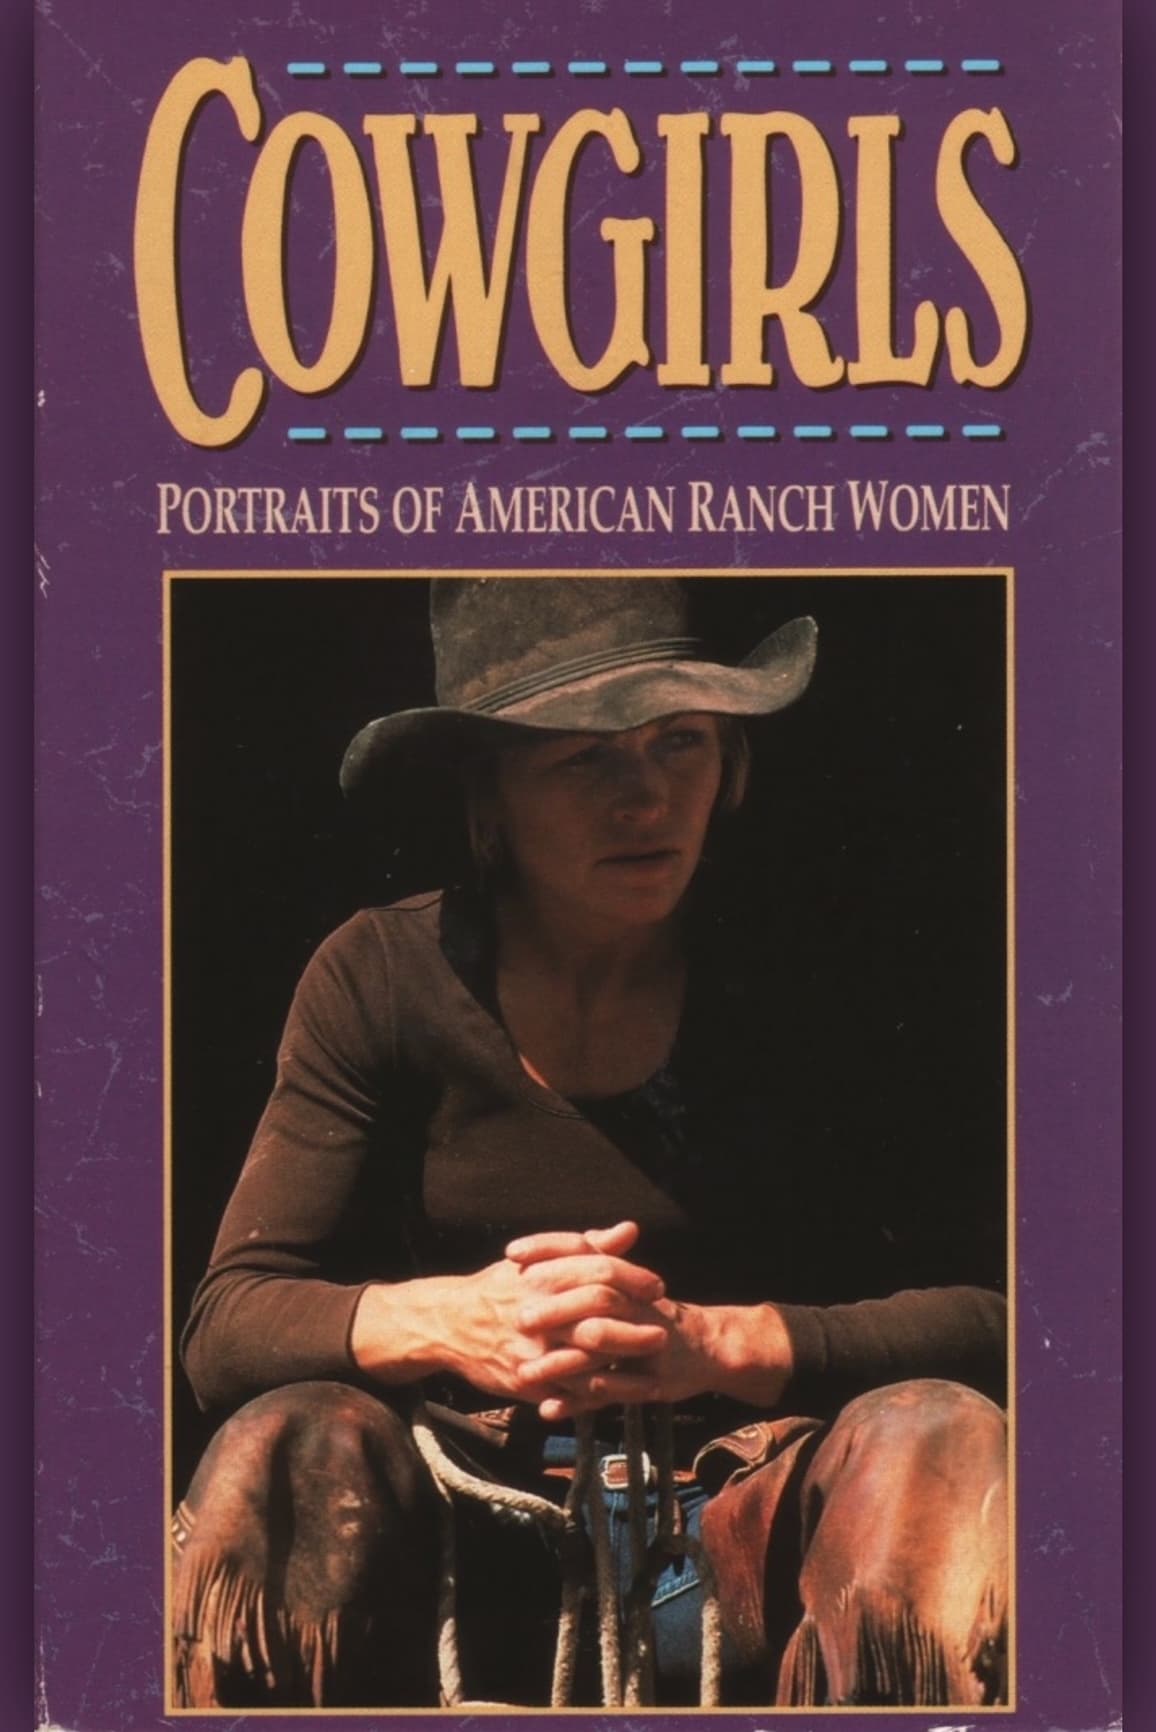 Cowgirls: Portraits of American Ranch Women